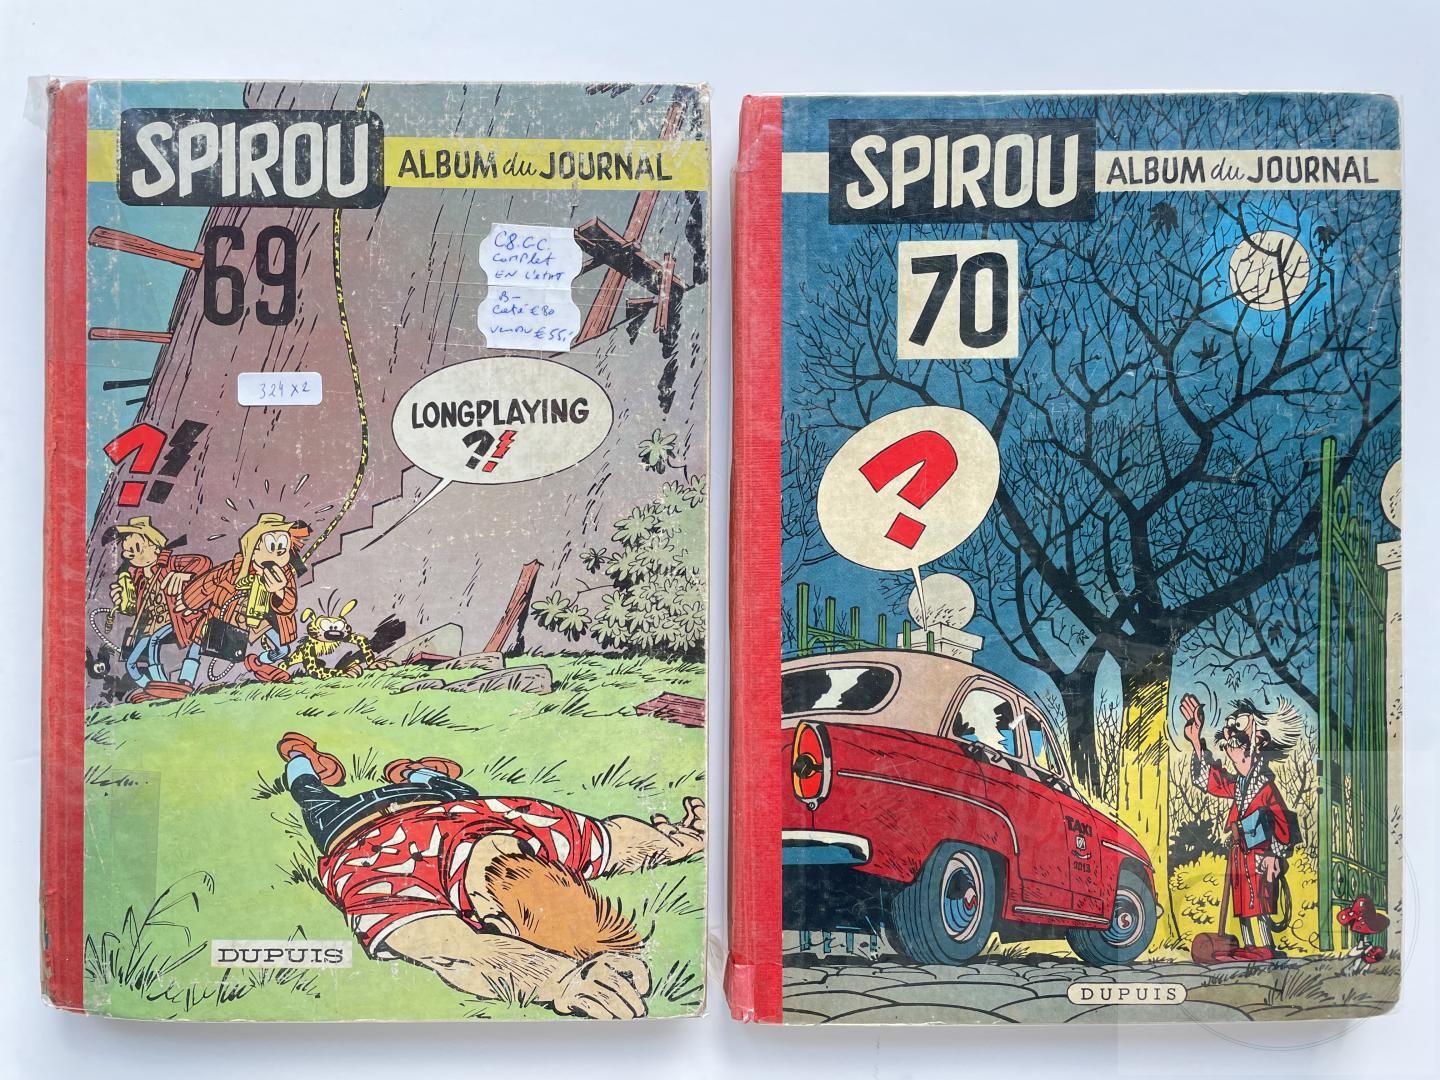 Null Le journal de Spirou/Reliure editeur n°69+70 del 1959. Completo in BE+BE